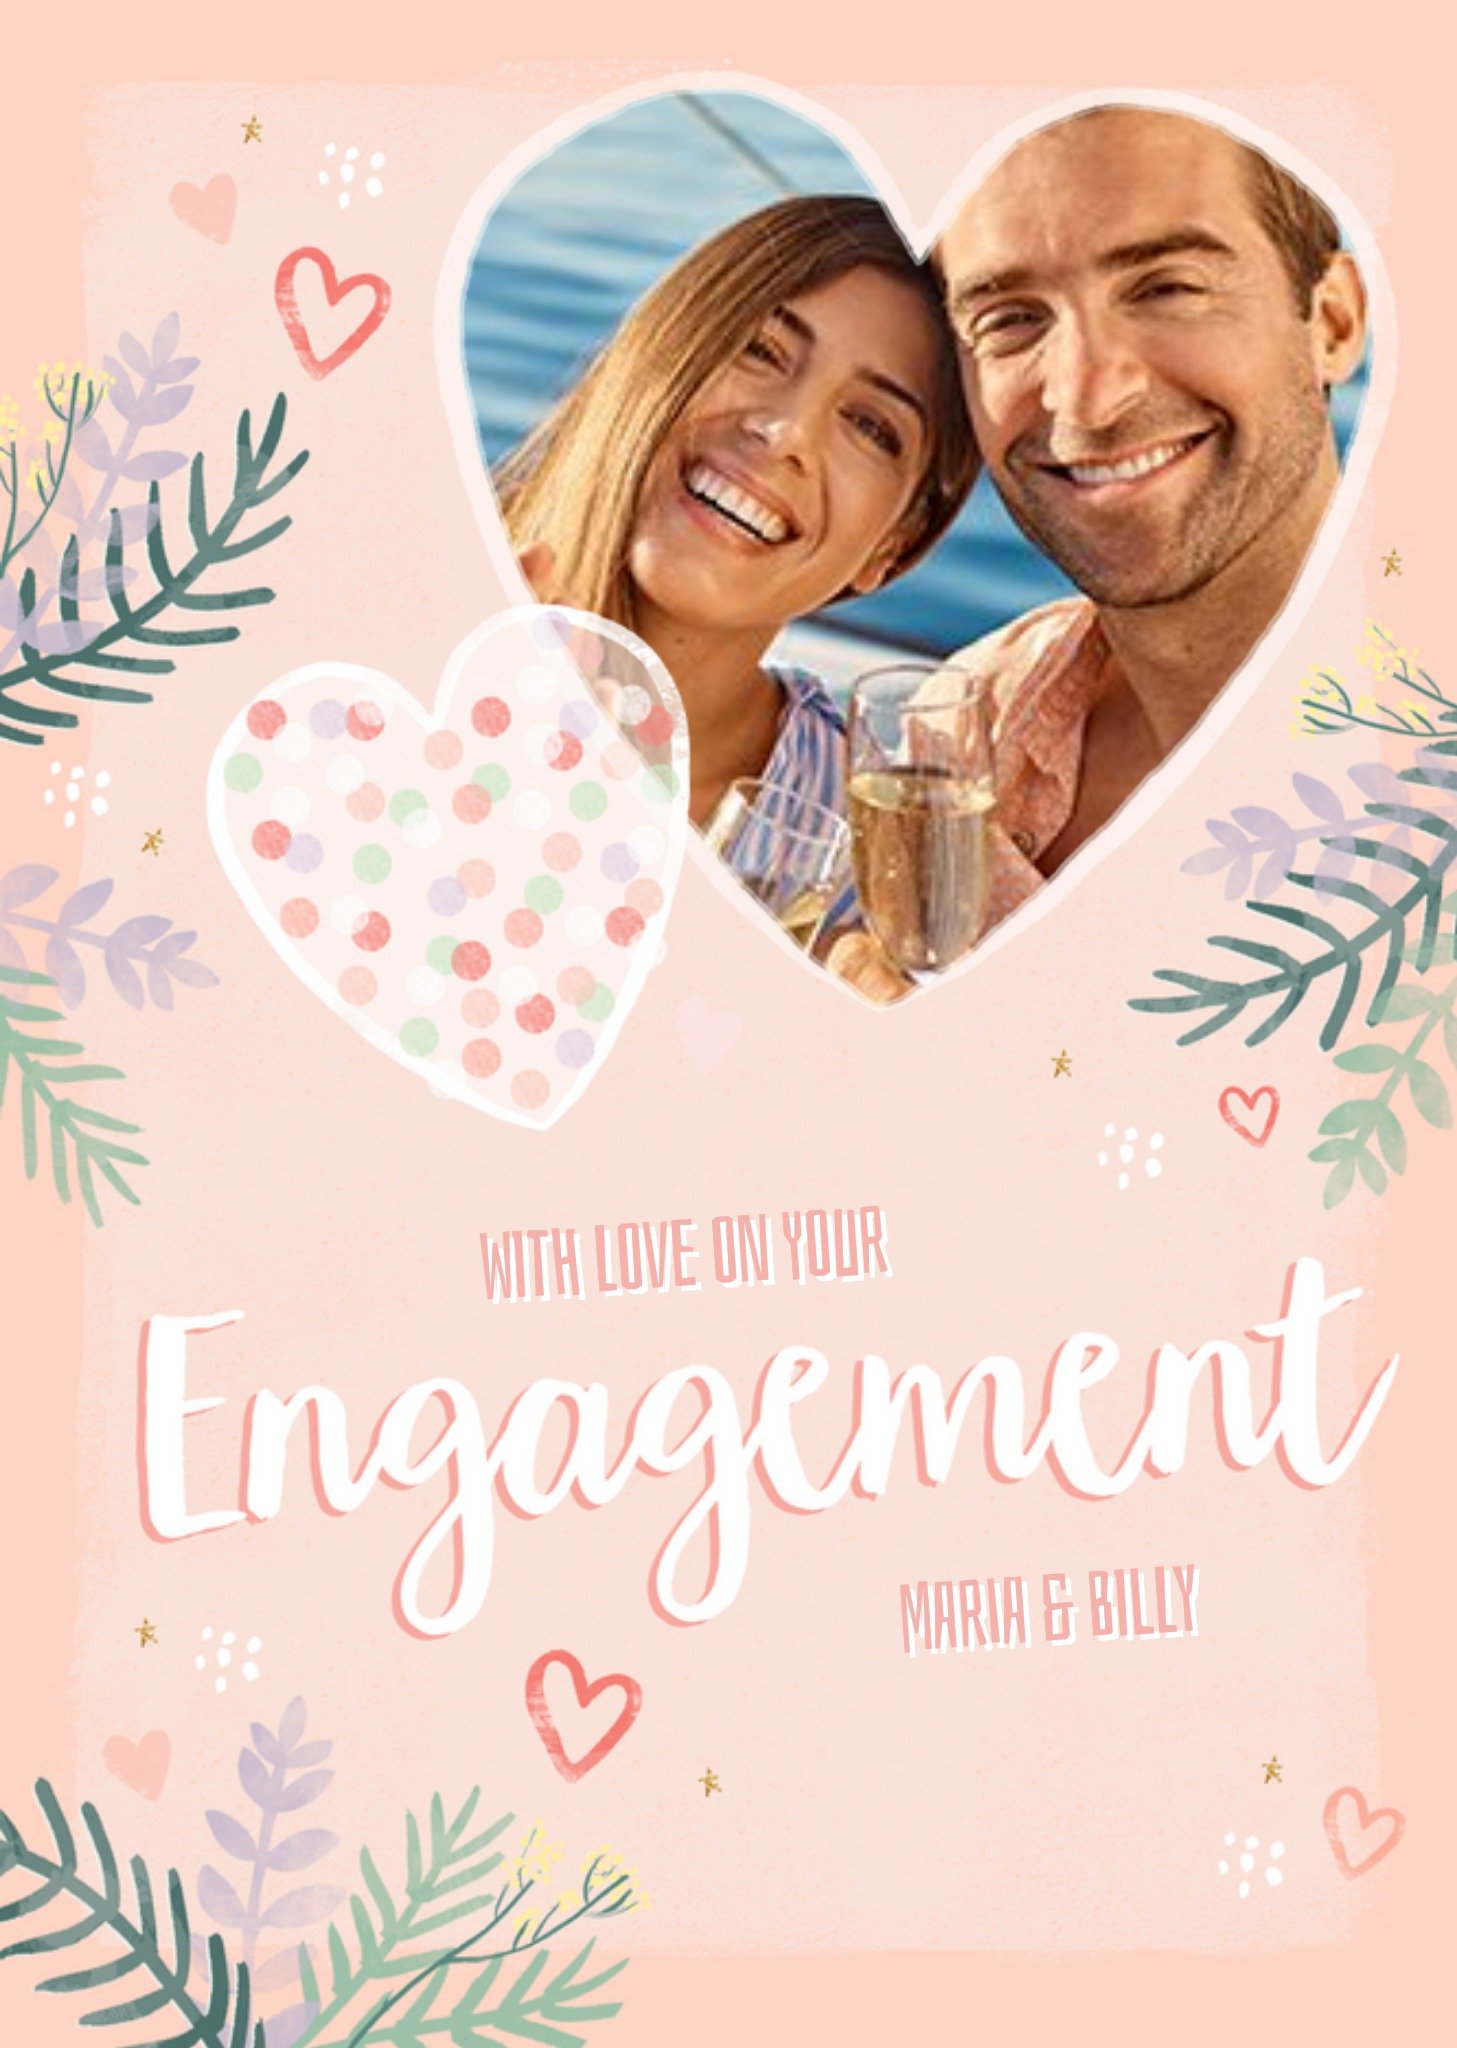 Love Hearts Studio Sundae Wonder Wish Love Engagement Photo Upload Card Ecard